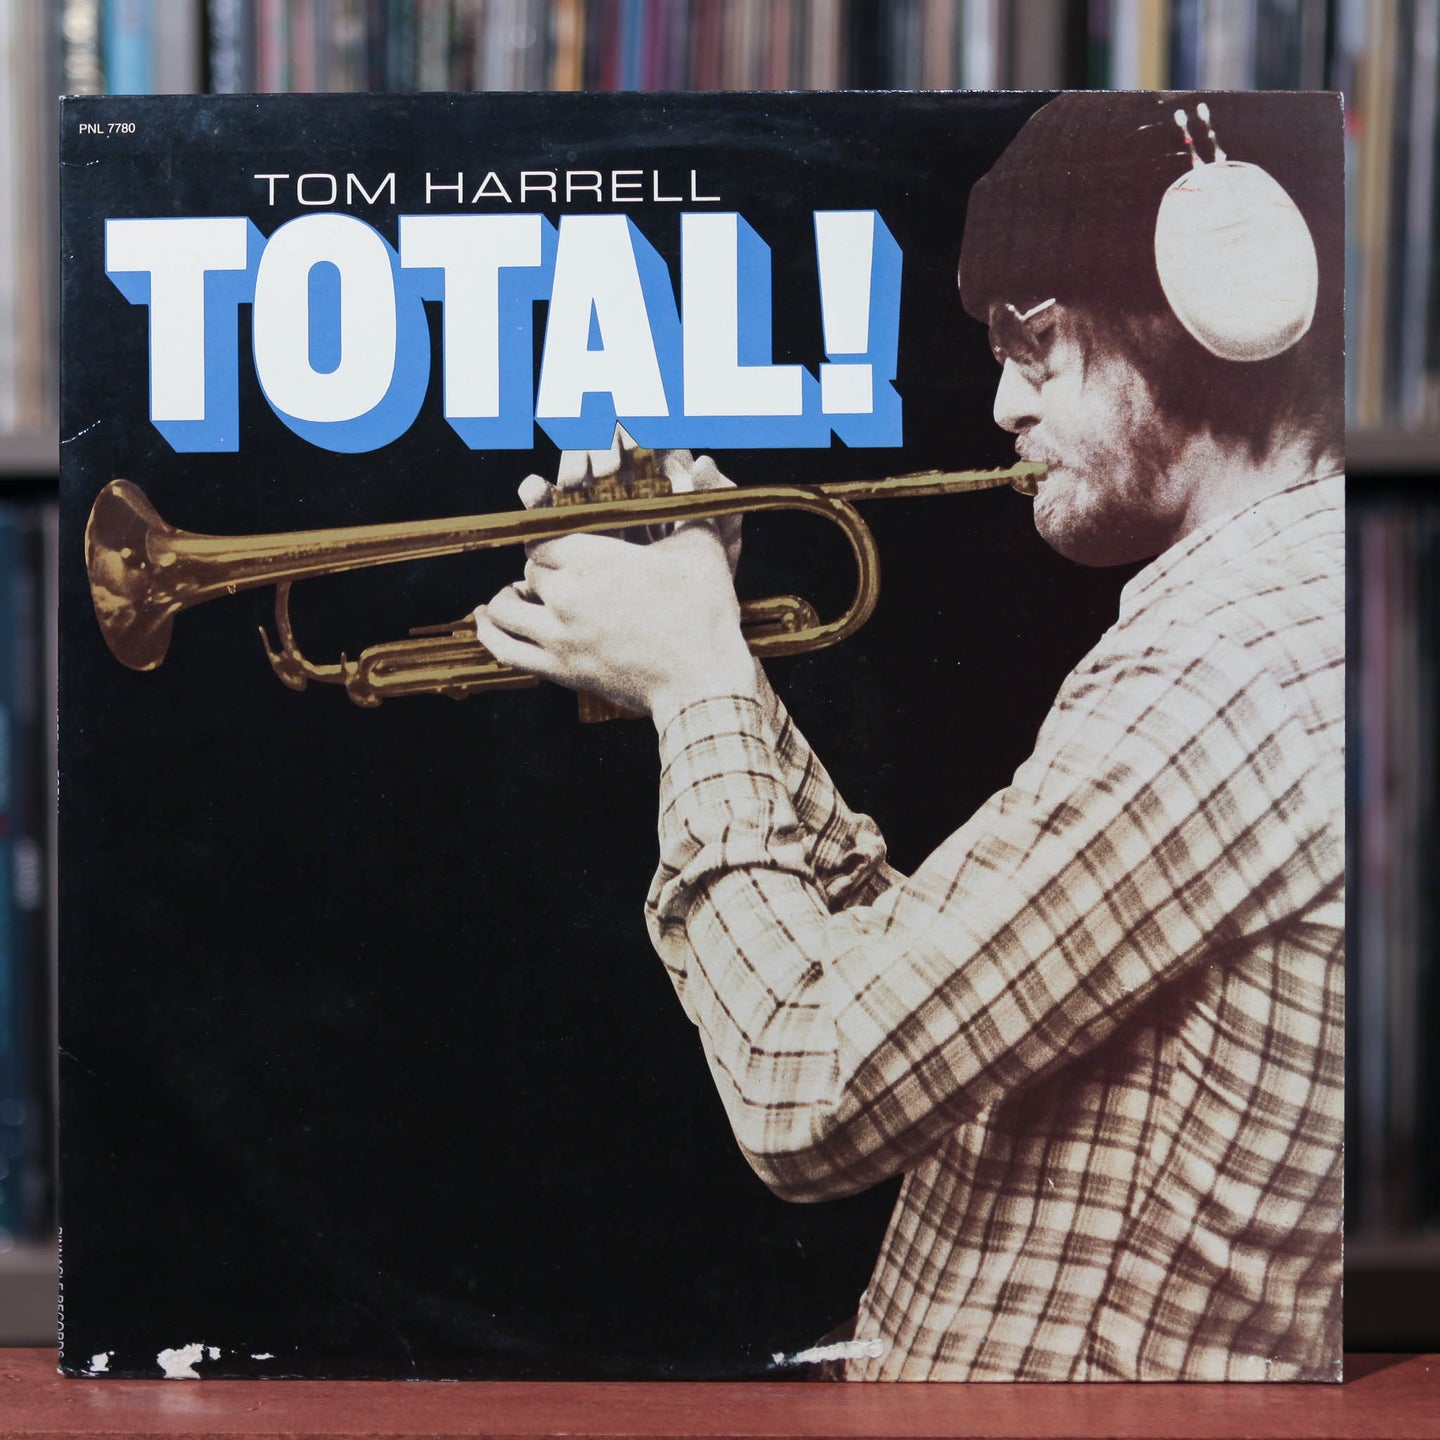 Tom Harrell - Total! - 1987 Pinnacle, VG/EX